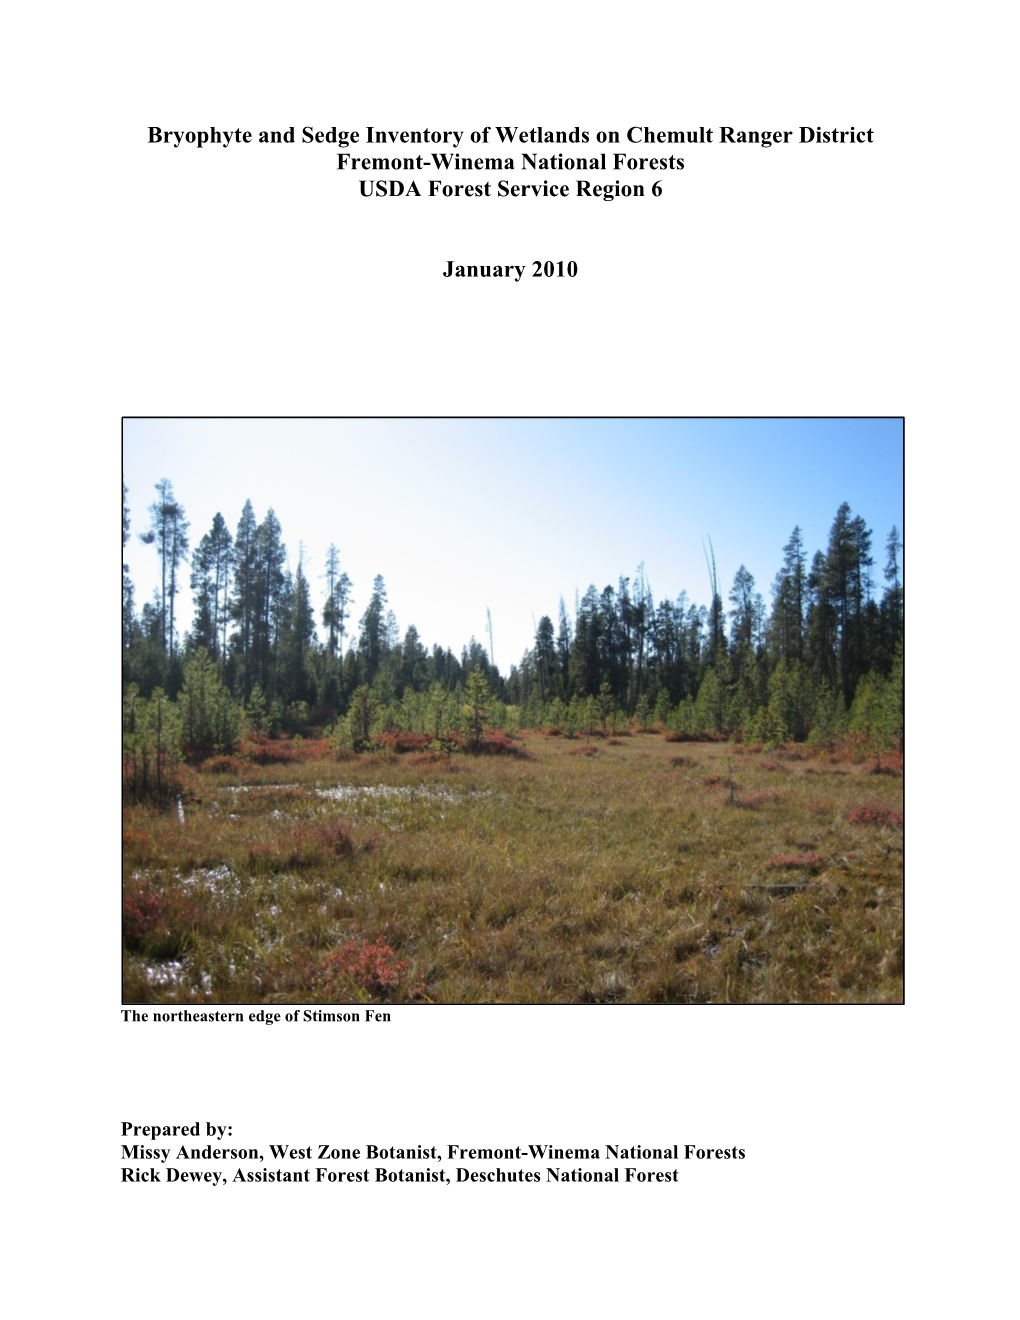 Bryophyte and Sedge Inventory of Wetlands on Chemult Ranger District Fremont-Winema National Forests USDA Forest Service Region 6